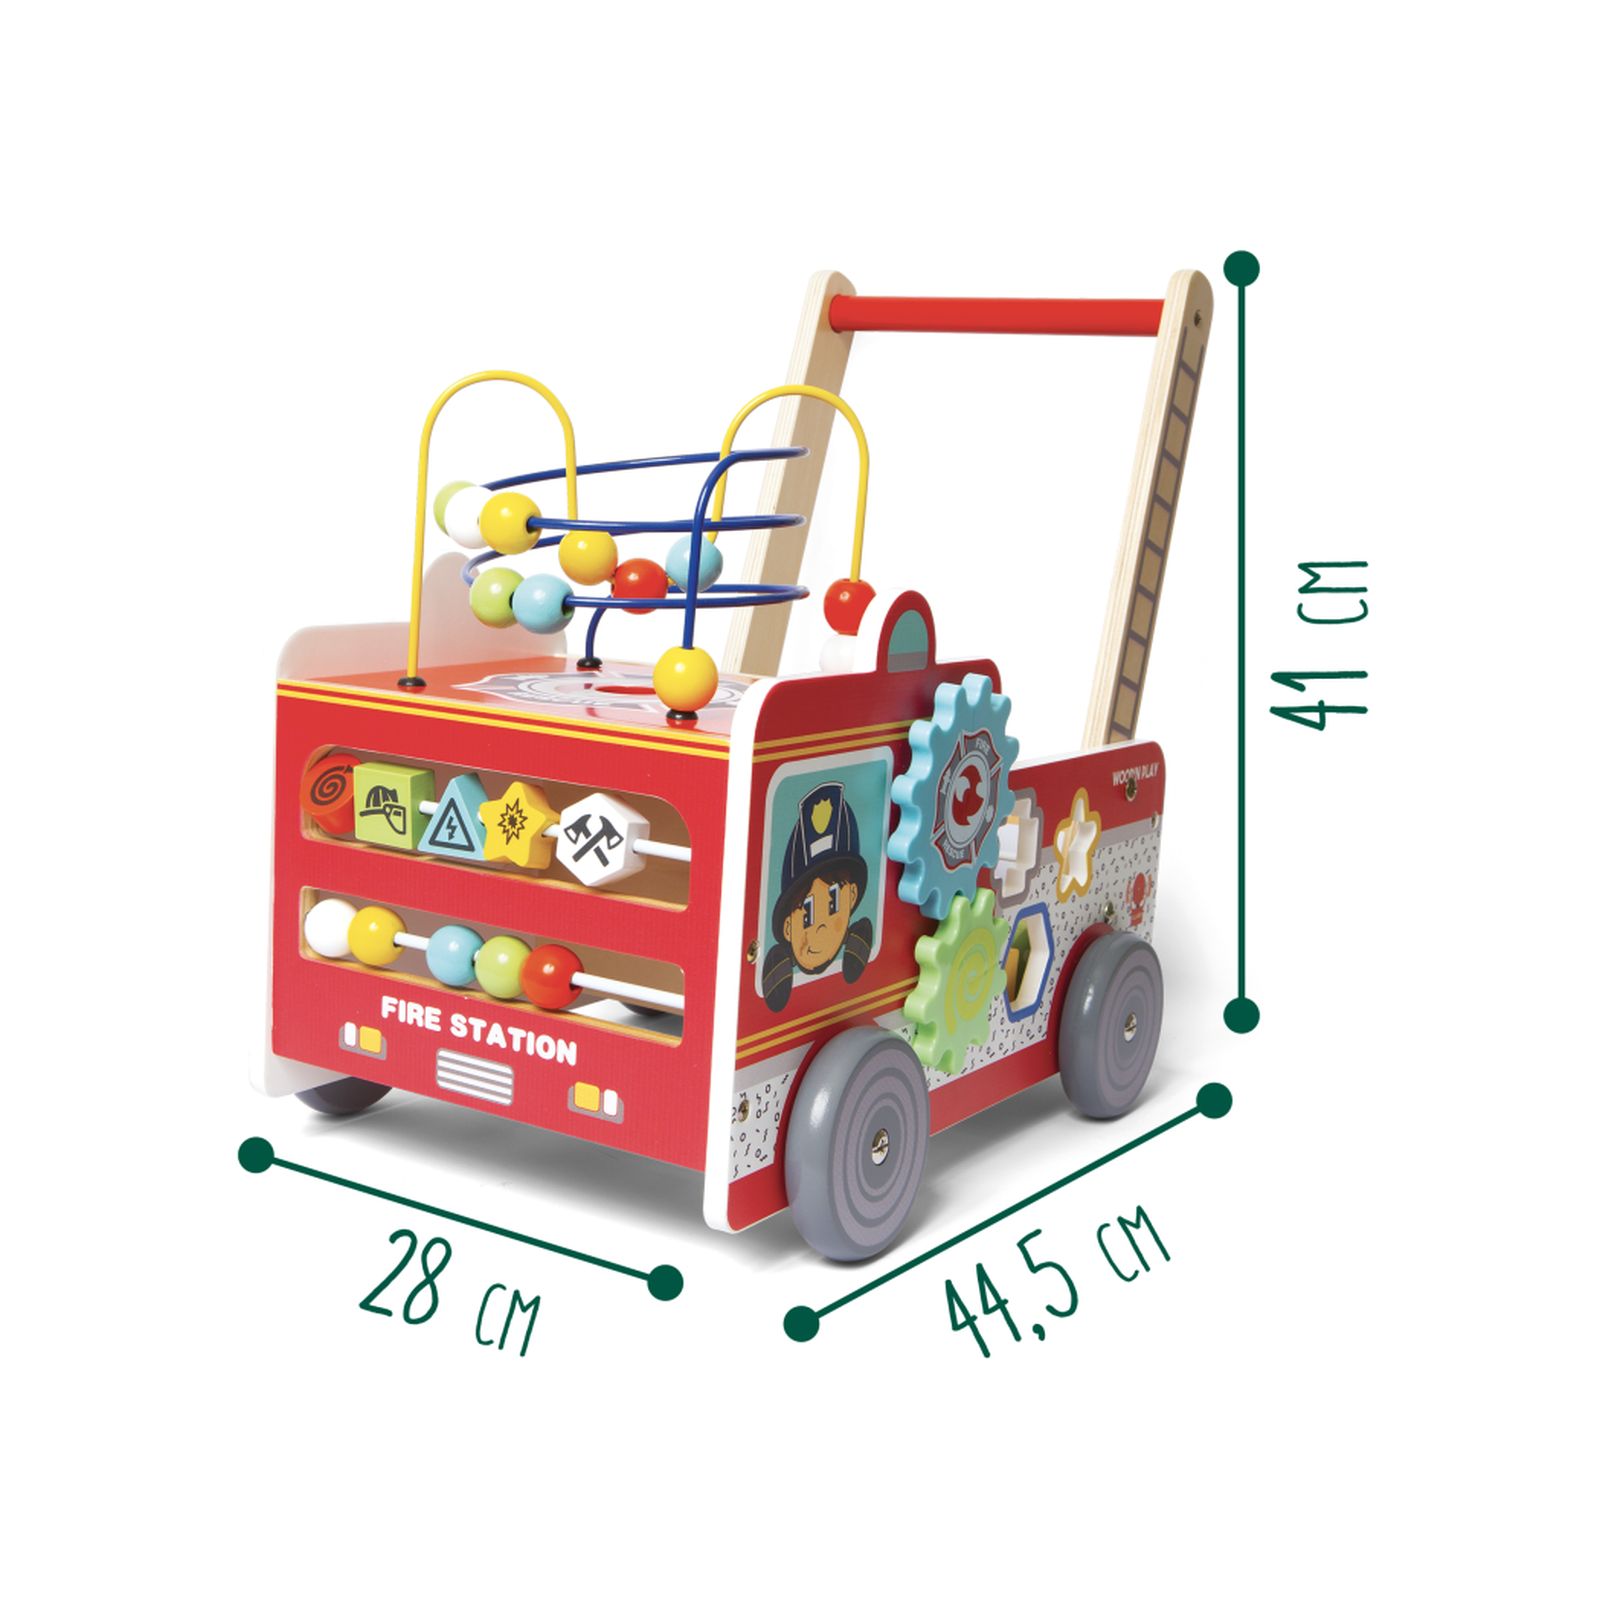 Camion dei pompieri - Basic toys - undefined